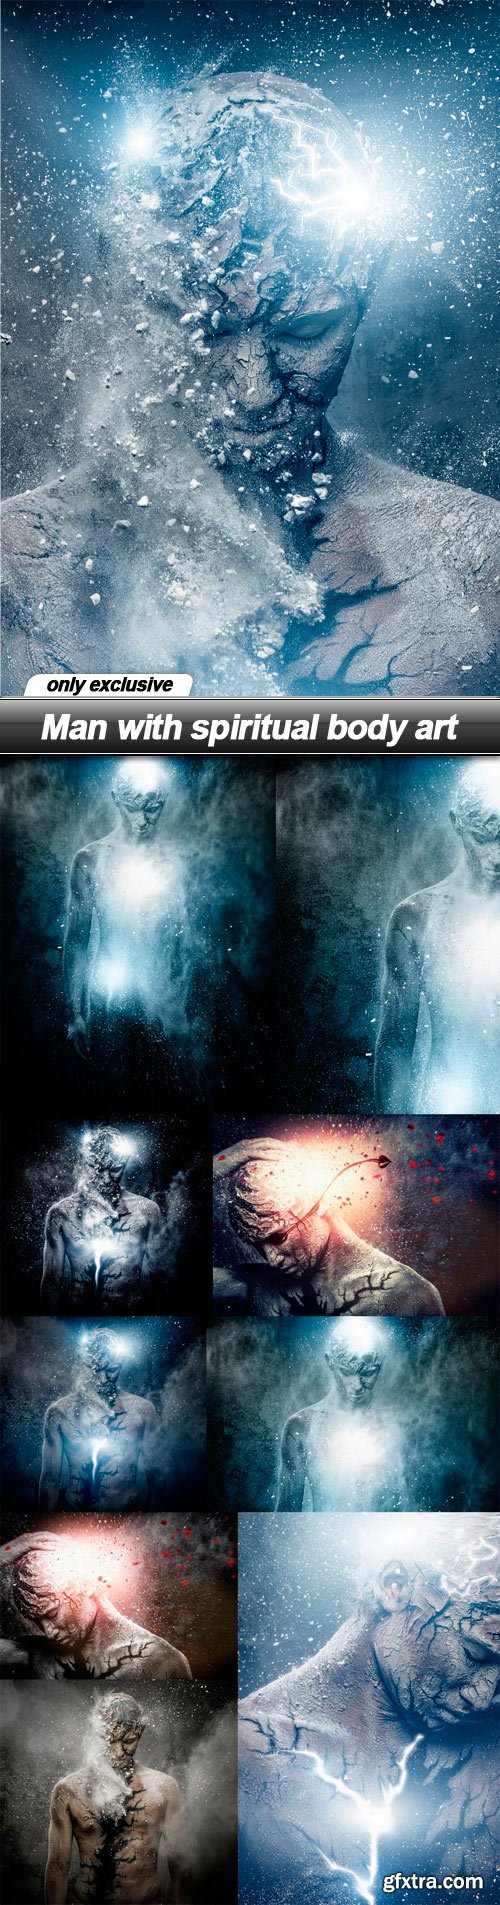 Man with spiritual body art - 10 UHQ JPEG